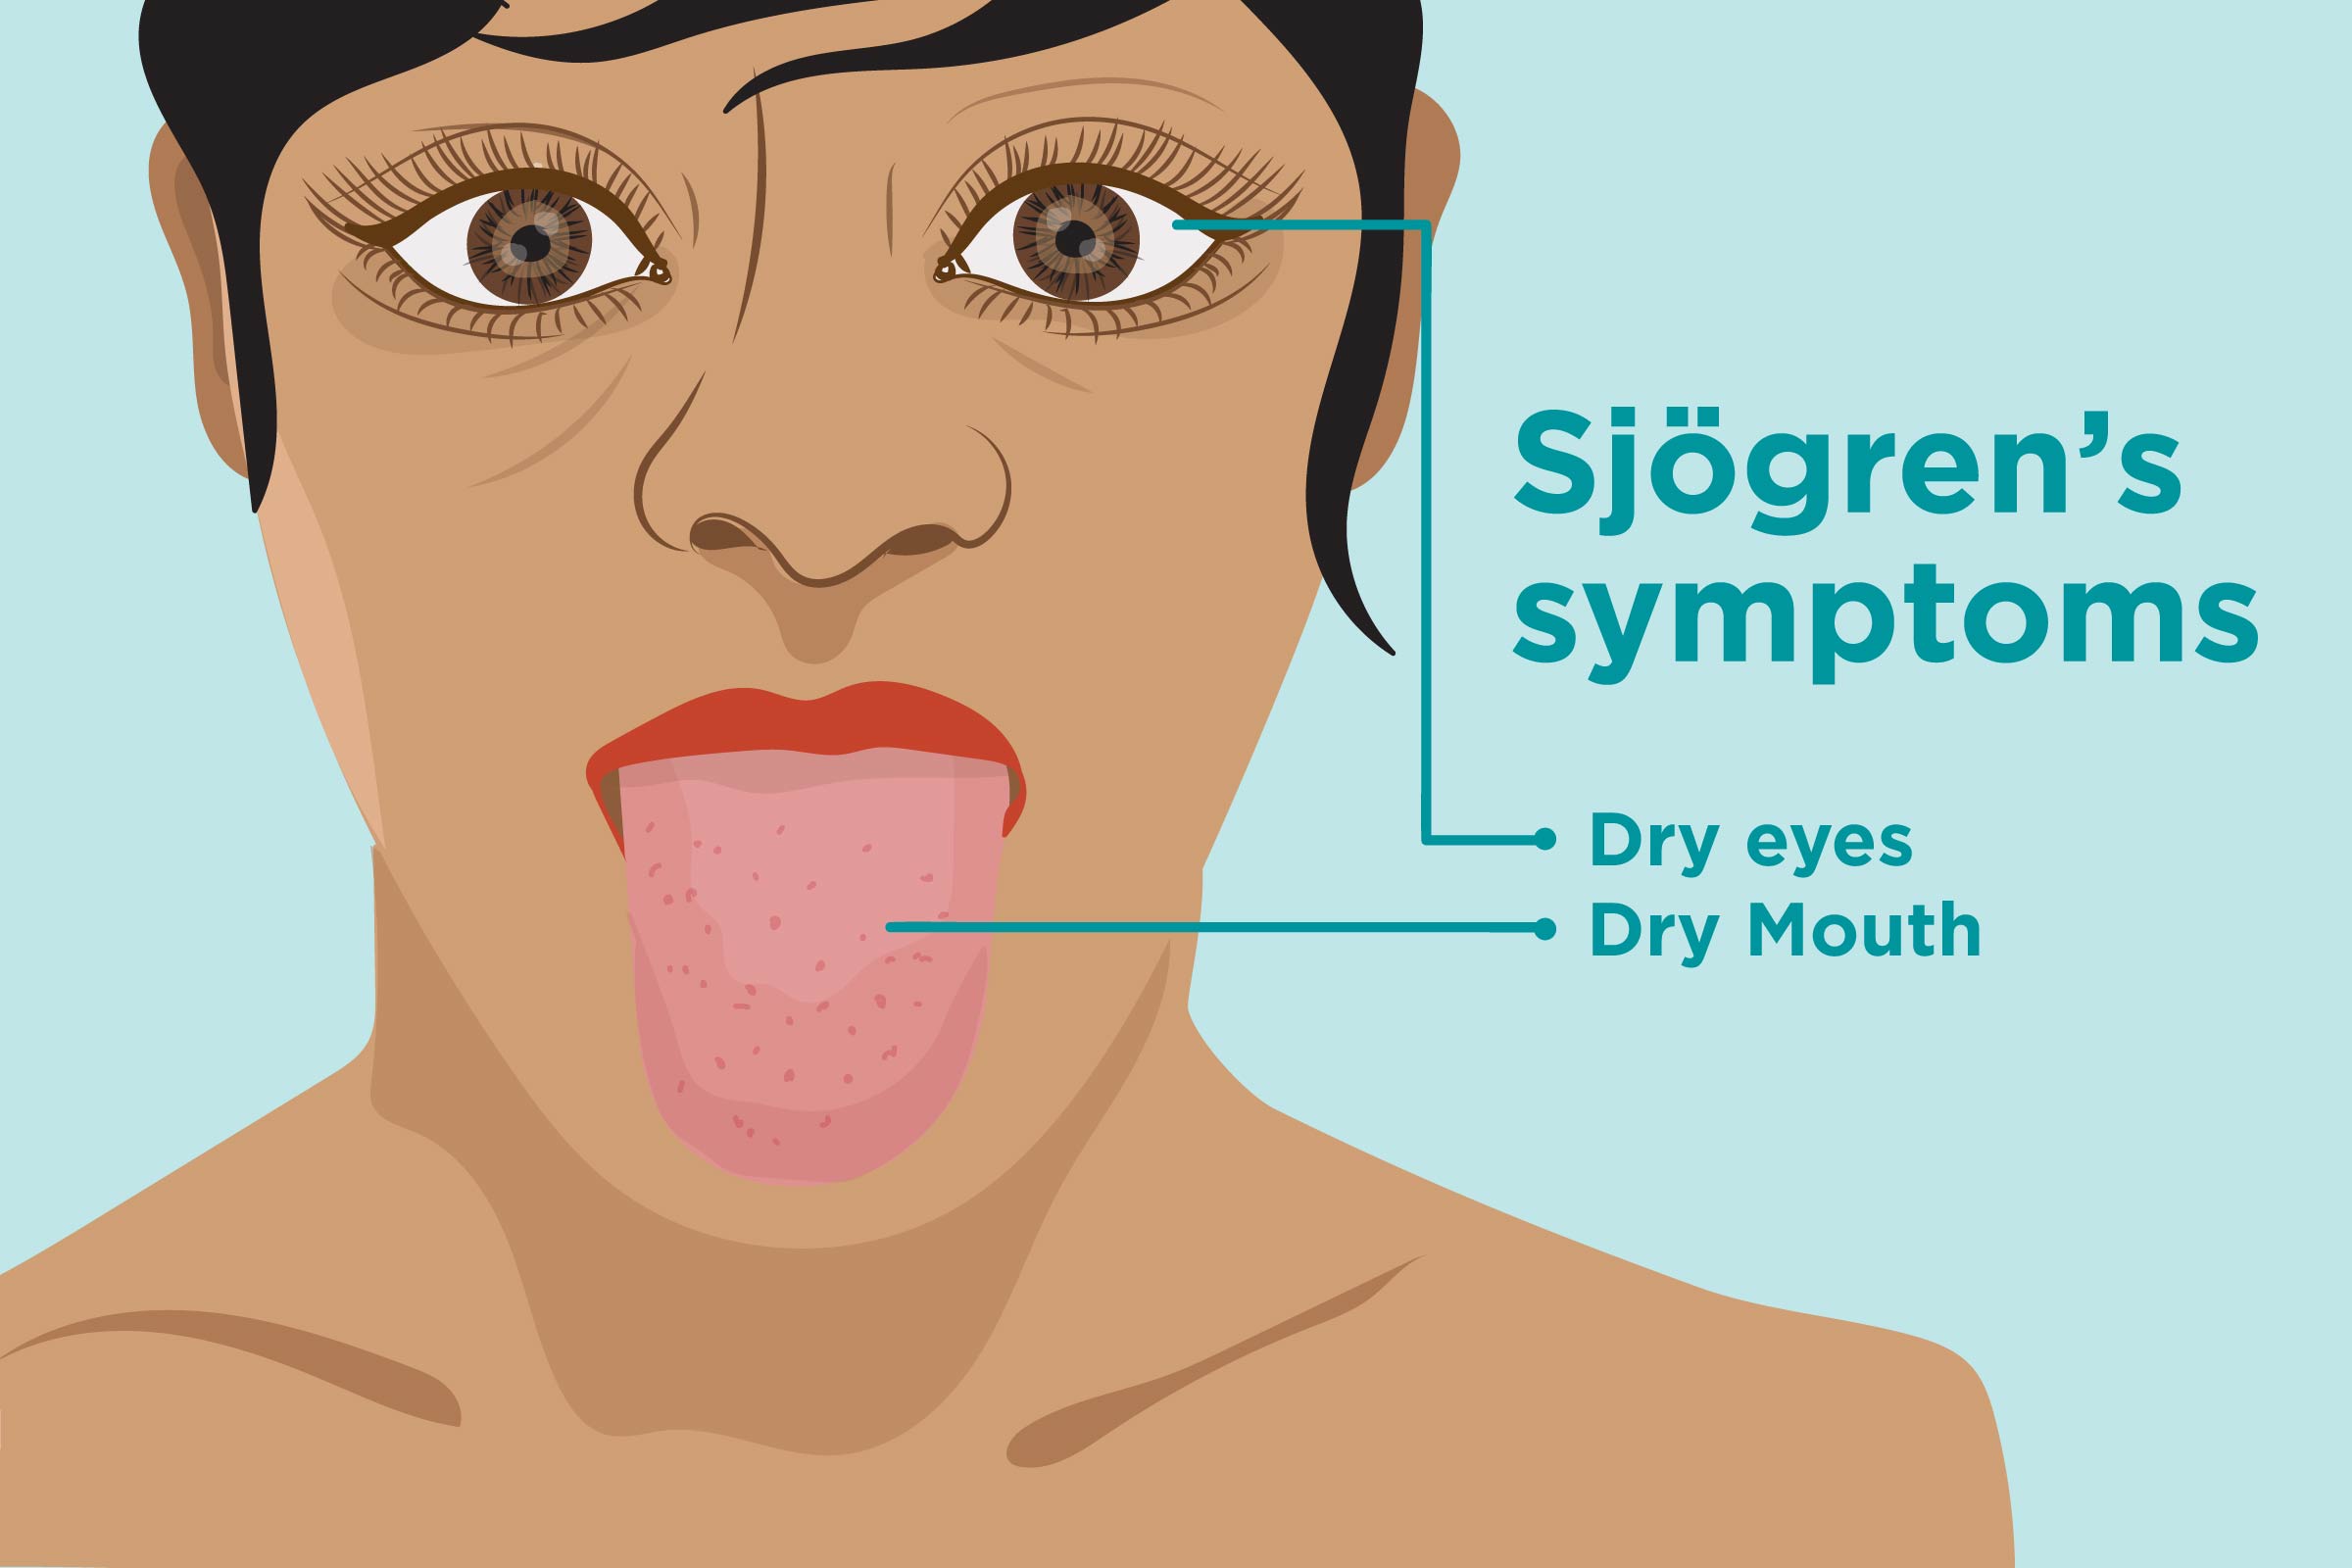 10 Symptoms of Sjögrenʼs syndrome You Should Never Ignore